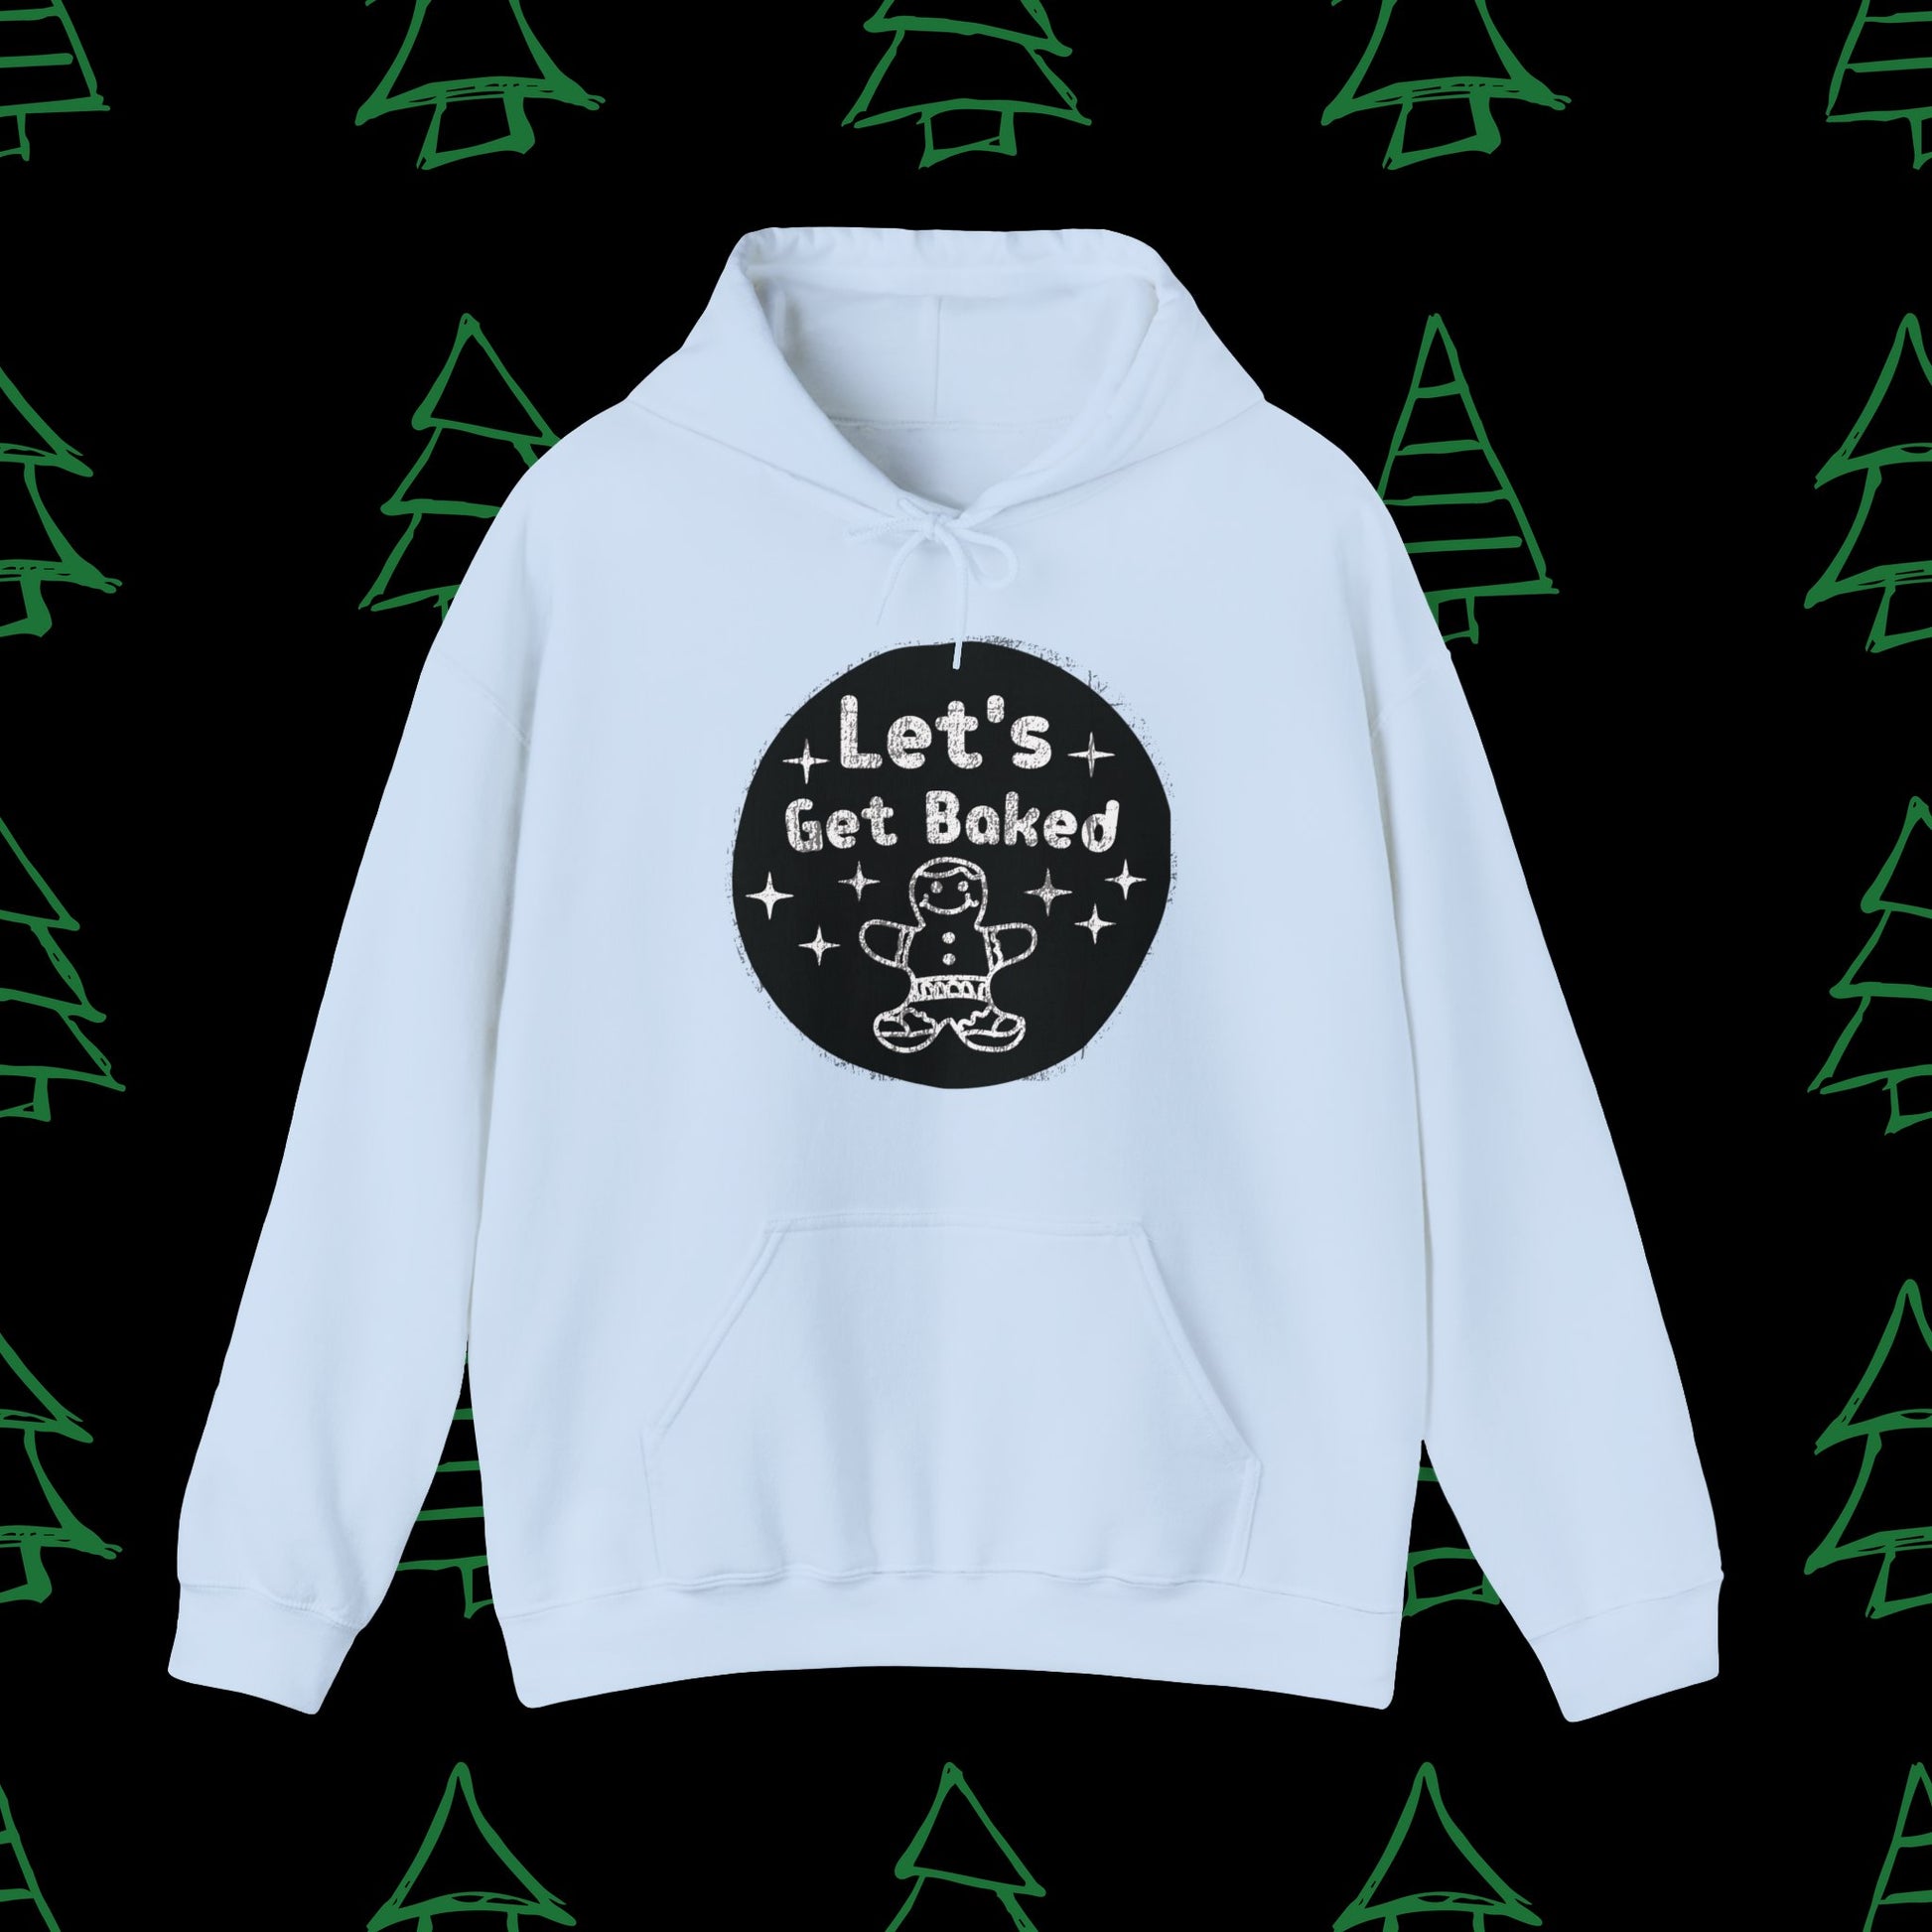 Christmas Hoodie - Let's Get Baked - Mens Christmas Shirts - Adult Christmas Hooded Sweatshirt Hooded Sweatshirt Graphic Avenue Light Blue Adult Small 